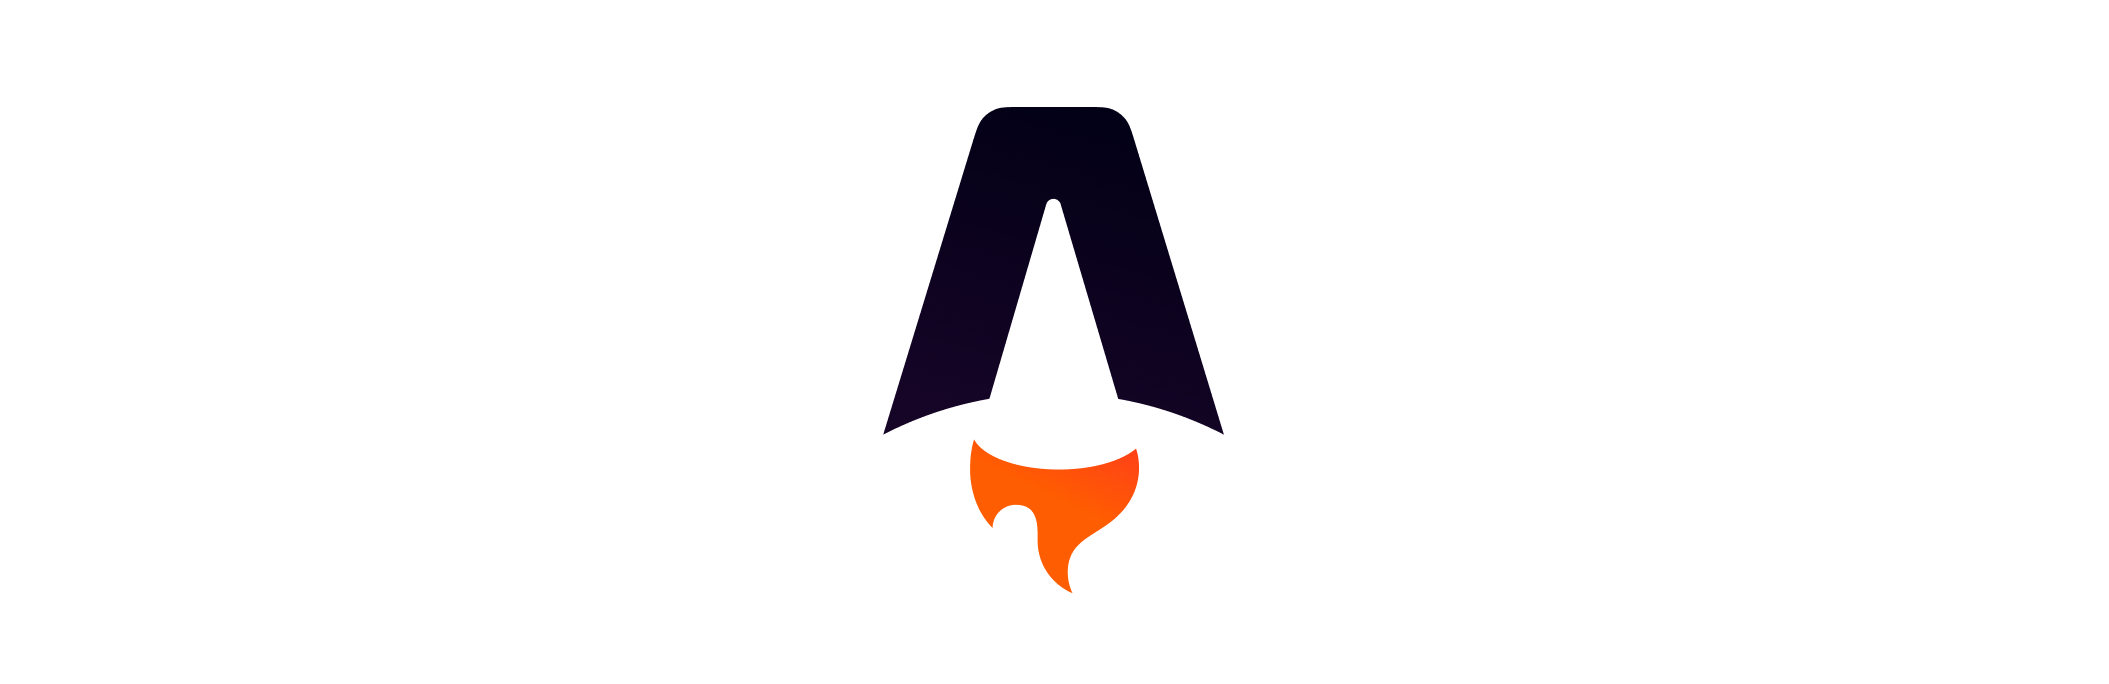 The Astro logo.